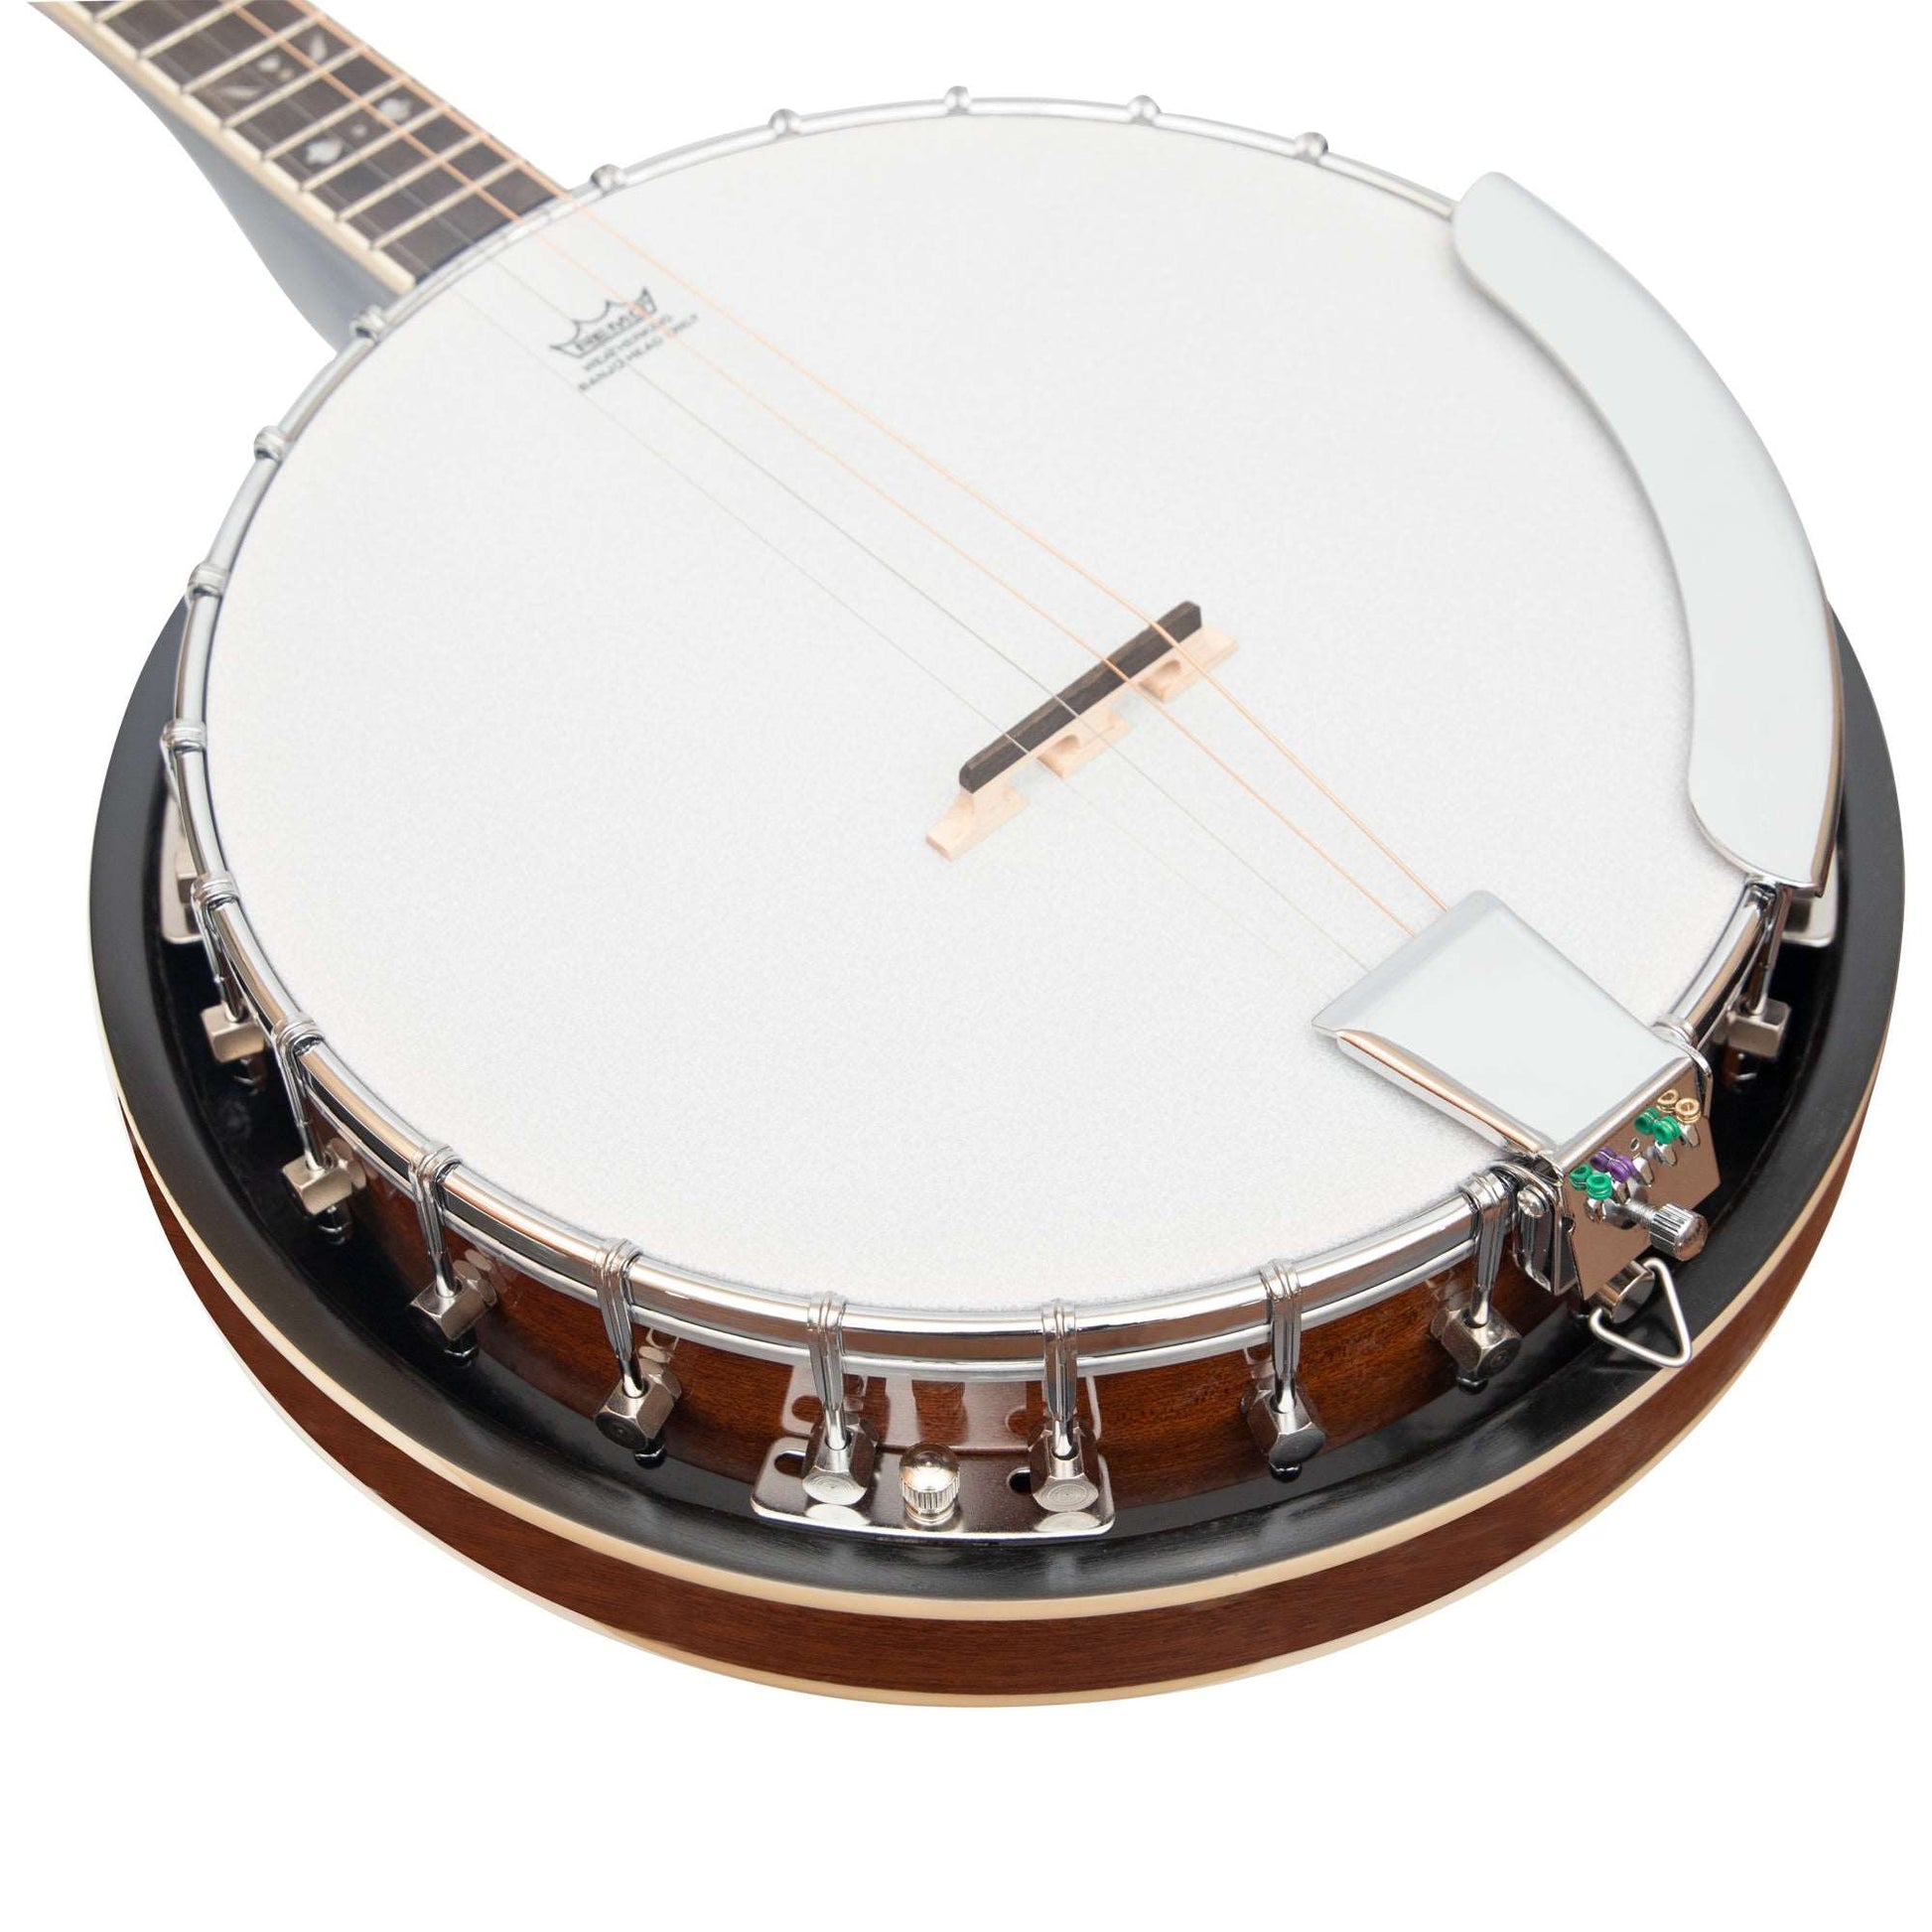 Heartland 4 String 17 Fret Irish Tenor Banjo Left Handed Player Series with Closed Solid Back Sunburst Finish